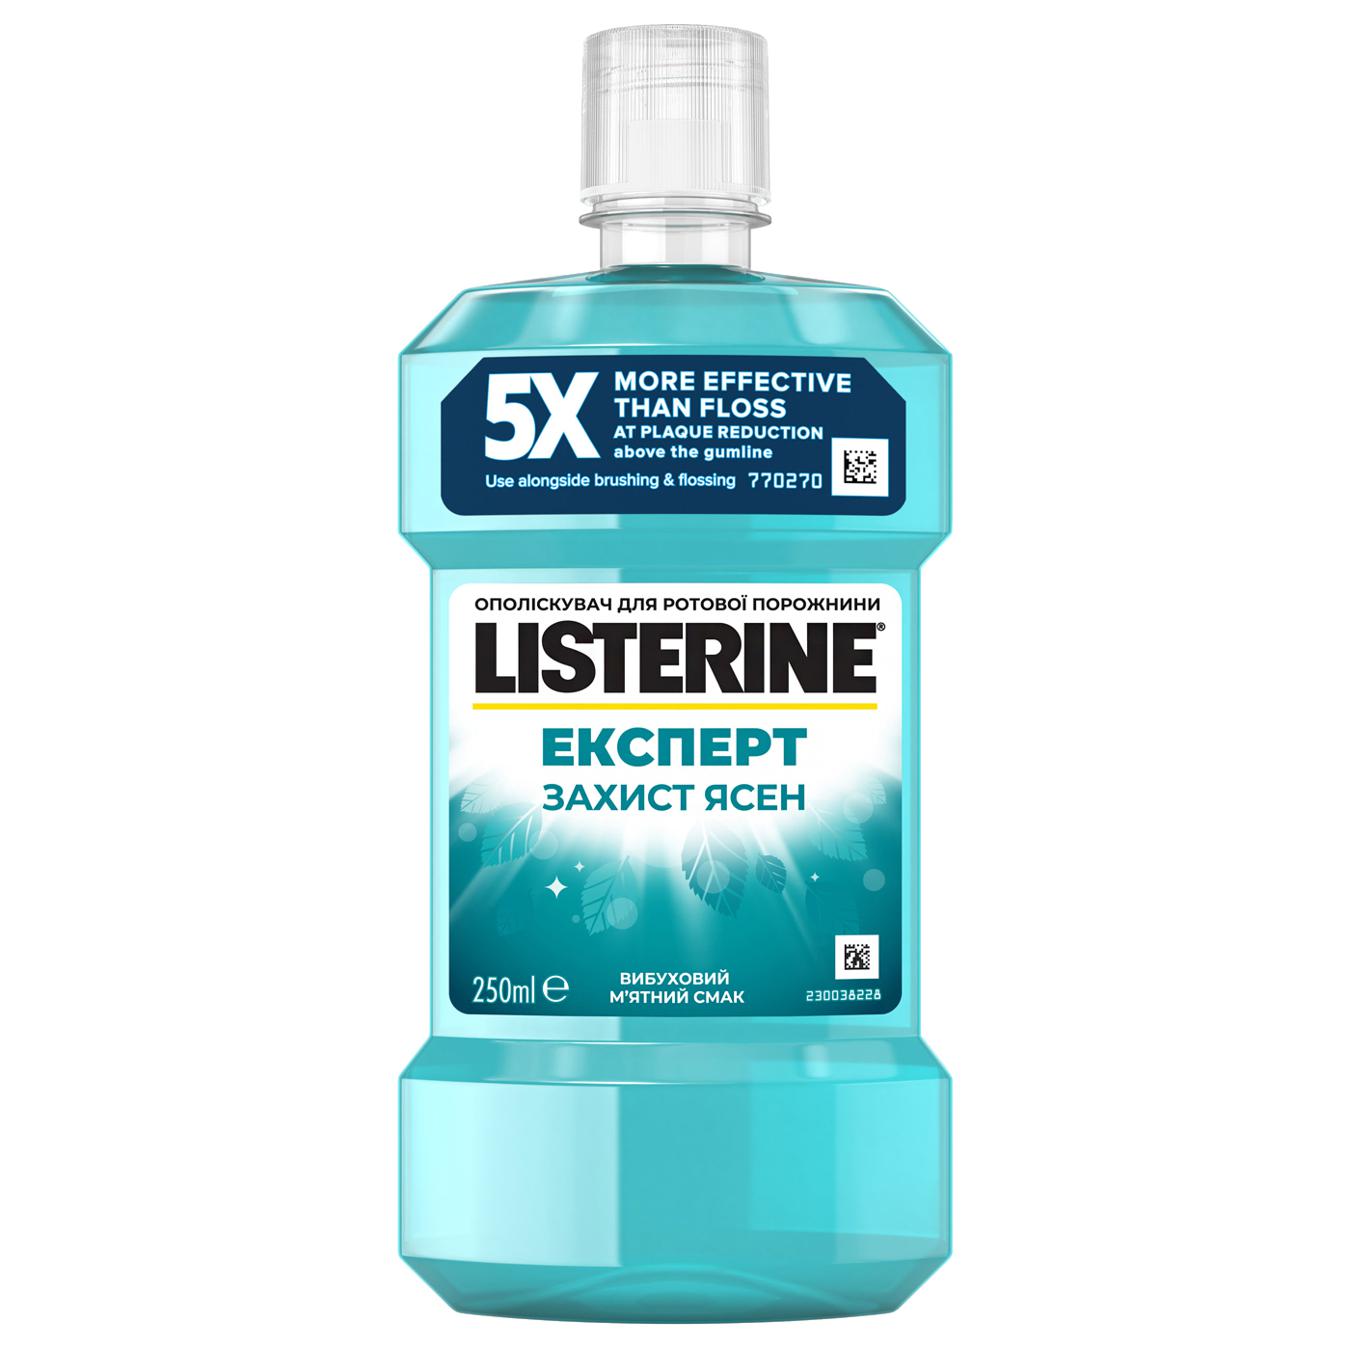 Listerine Expert Gum Protection Mouthwash 250ml